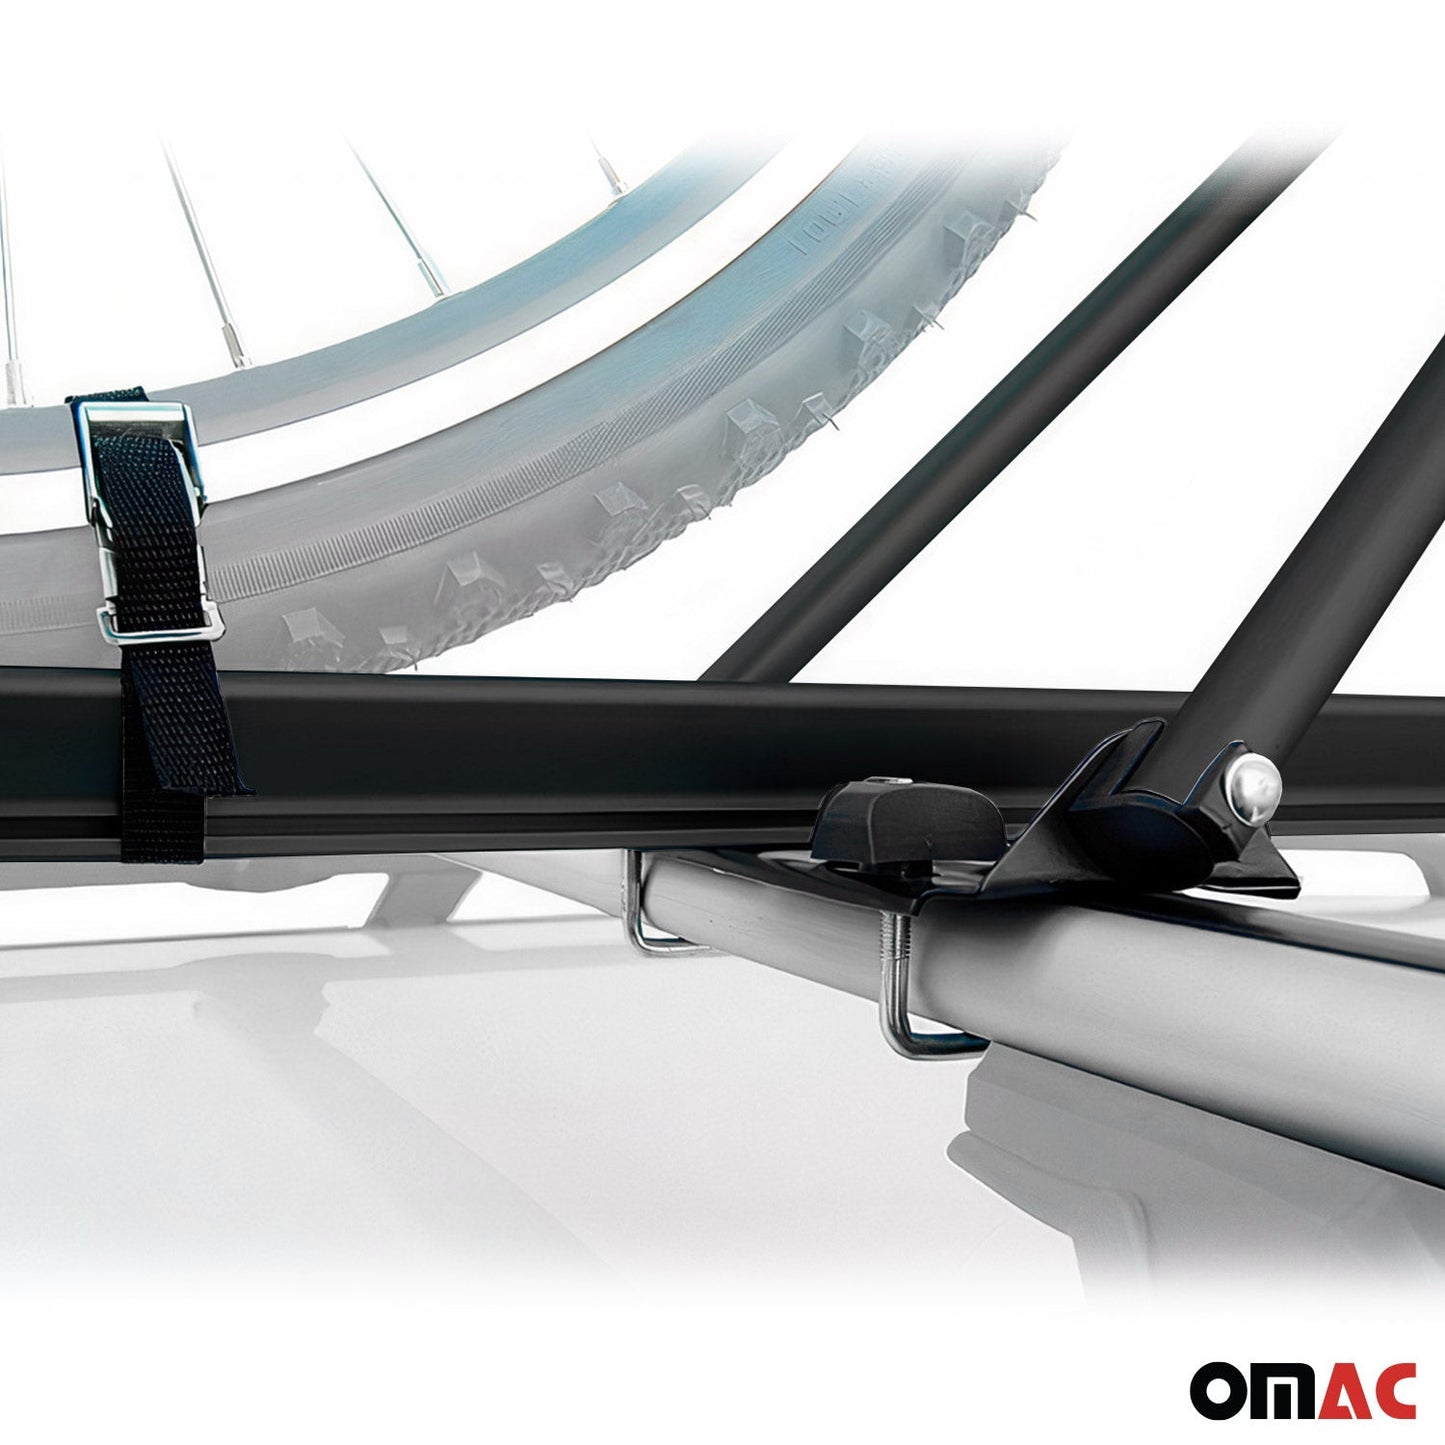 OMAC Bike Rack Carrier Roof Racks Set fits Subaru Forester 2009-2013 Black 3x U020730